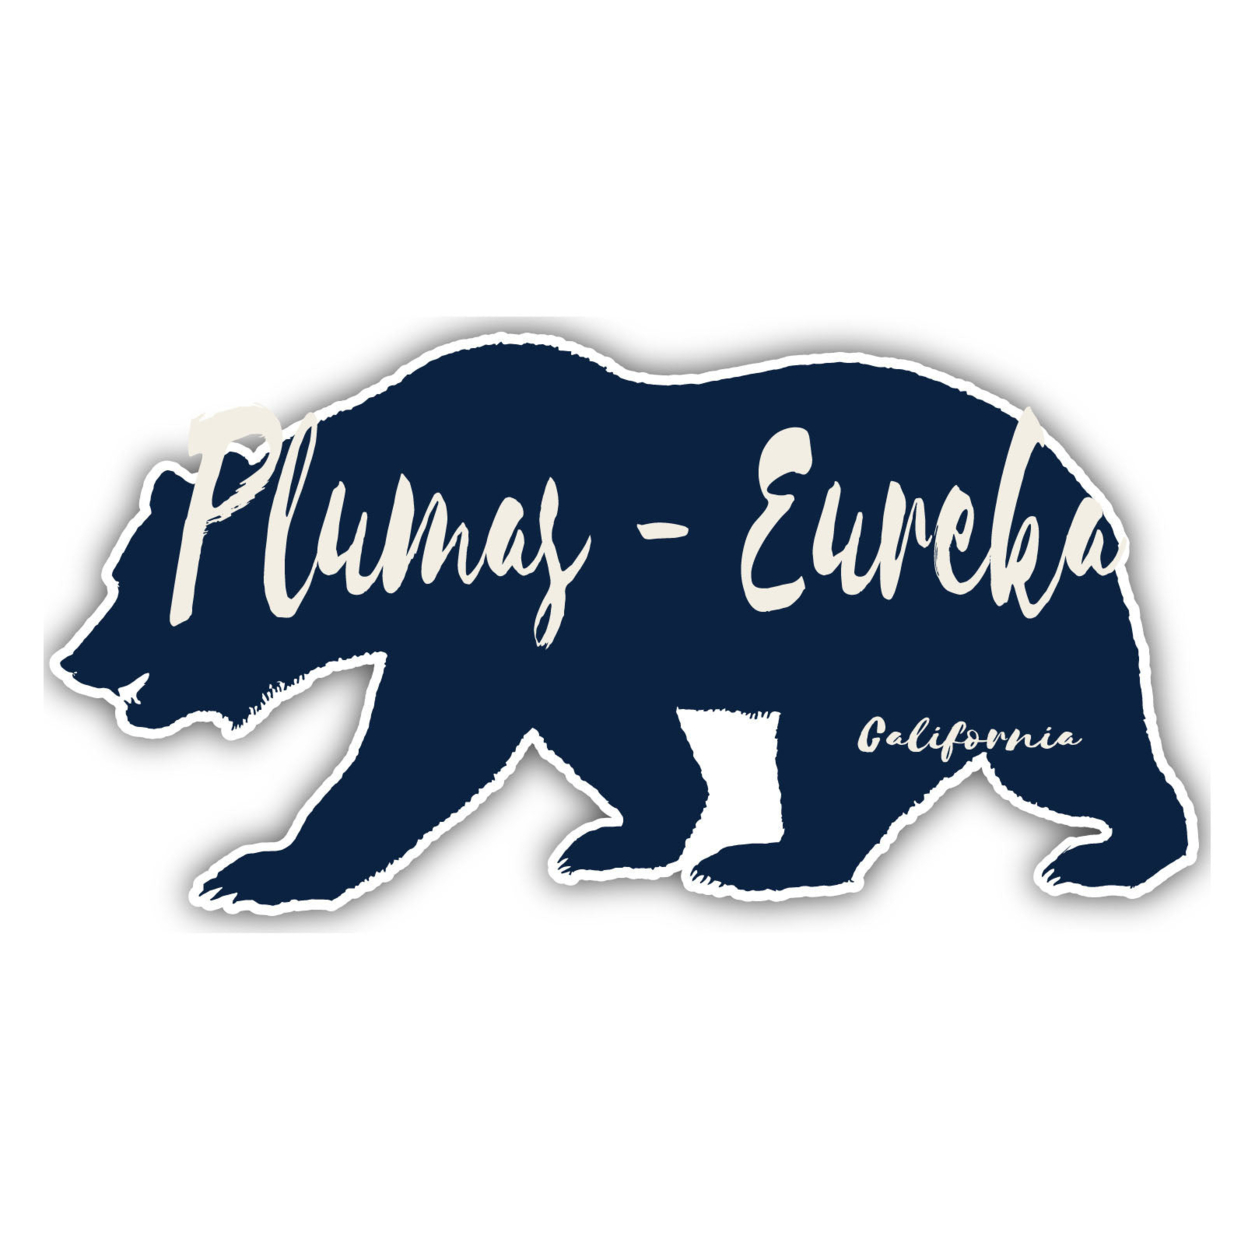 Plumas - Eureka California Souvenir Decorative Stickers (Choose Theme And Size) - Single Unit, 2-Inch, Bear